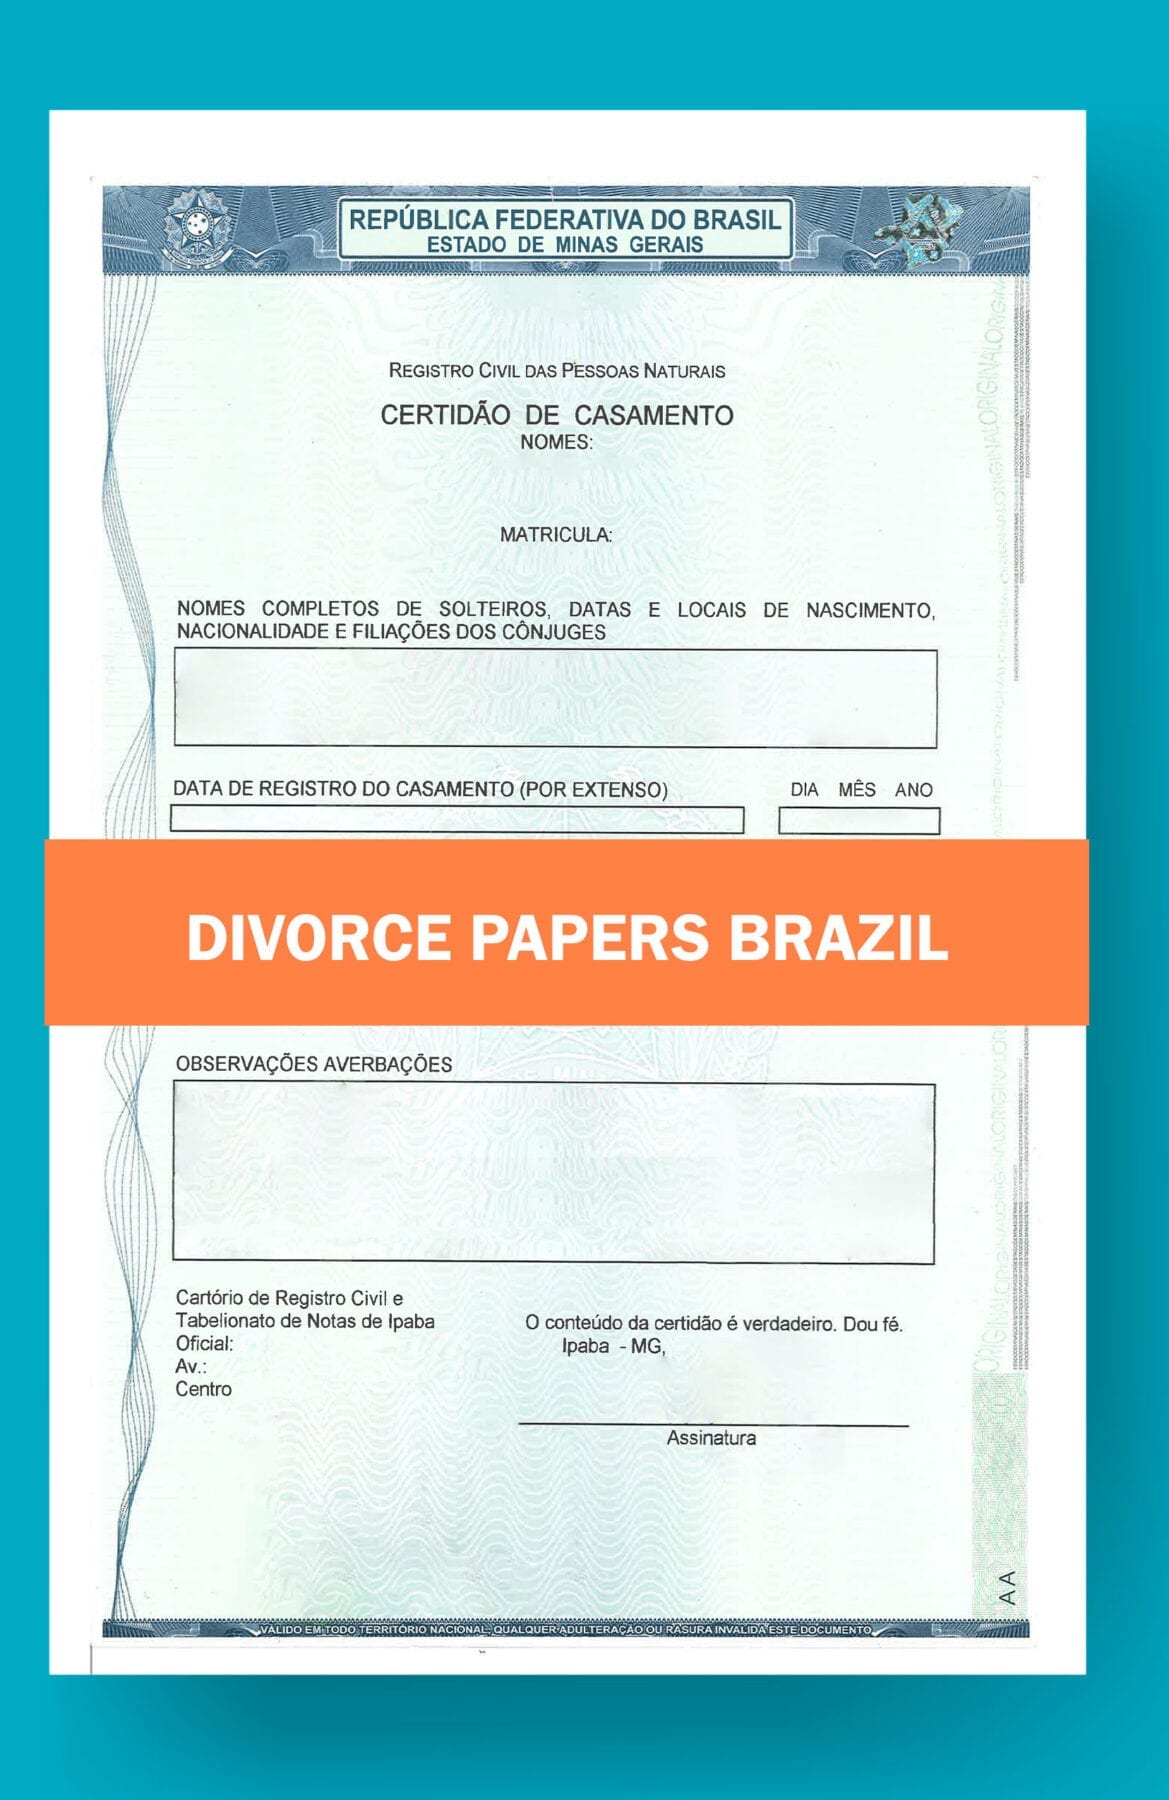 DIVORCE-PAPERS-BRAZIL